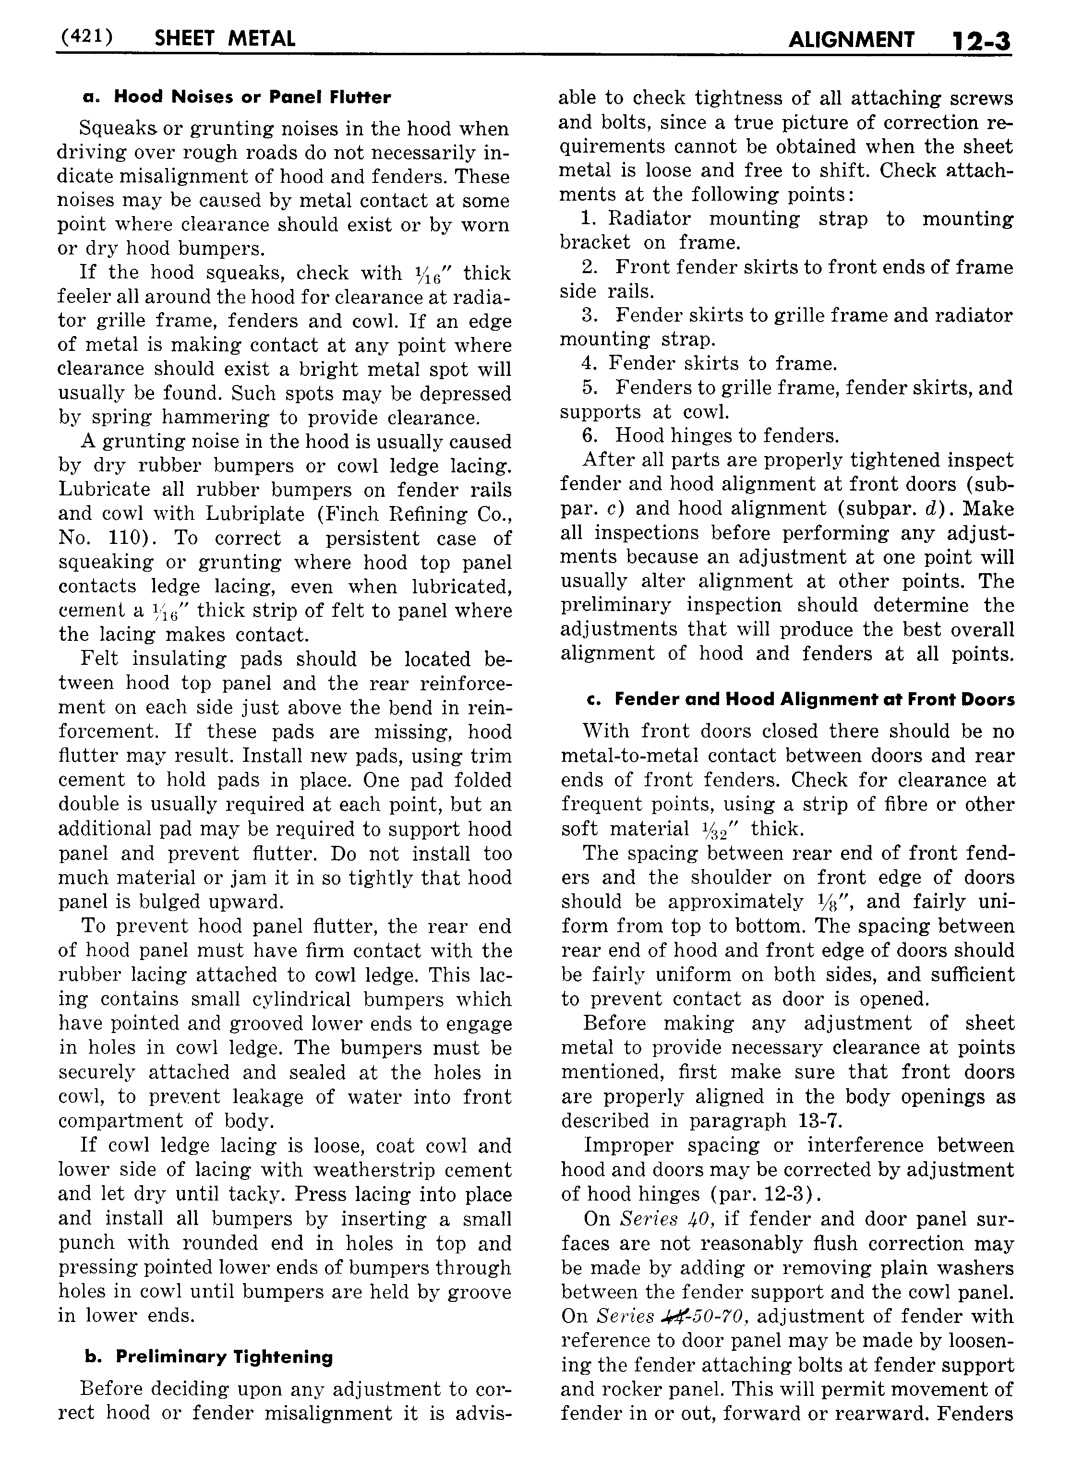 n_13 1951 Buick Shop Manual - Sheet Metal-003-003.jpg